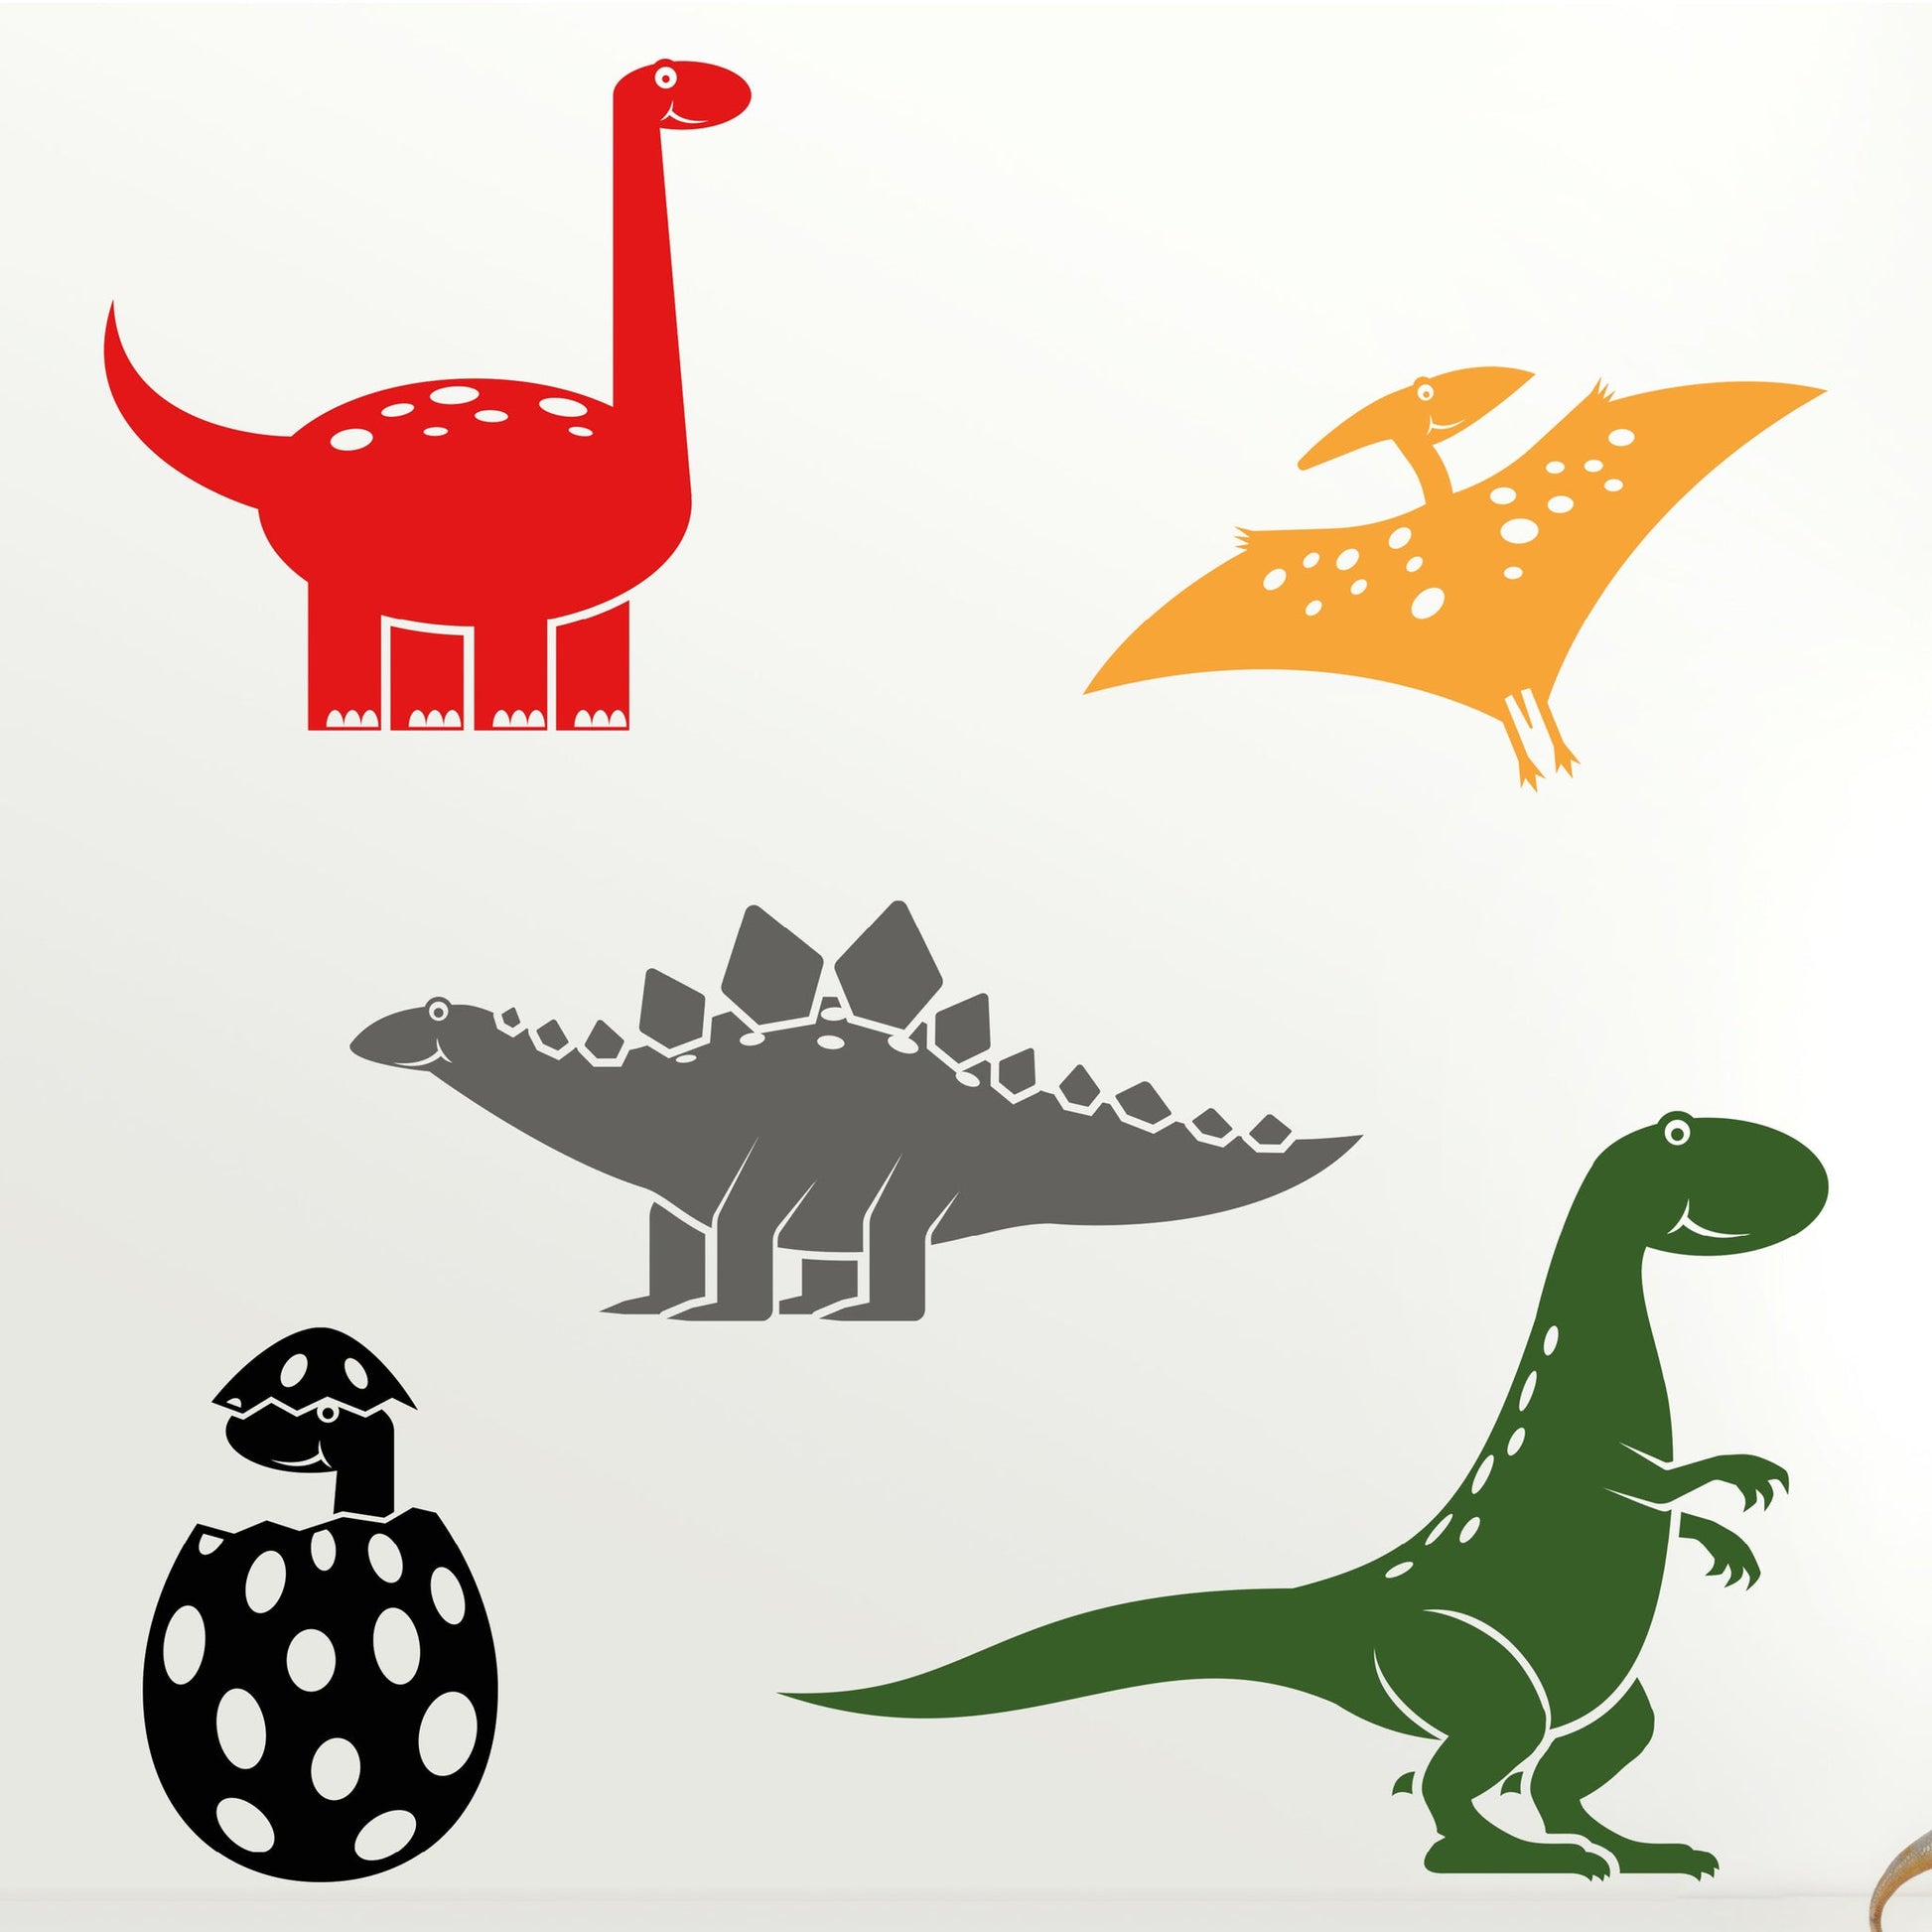 Dinosaur Velociraptor - Wall Decal Sticker